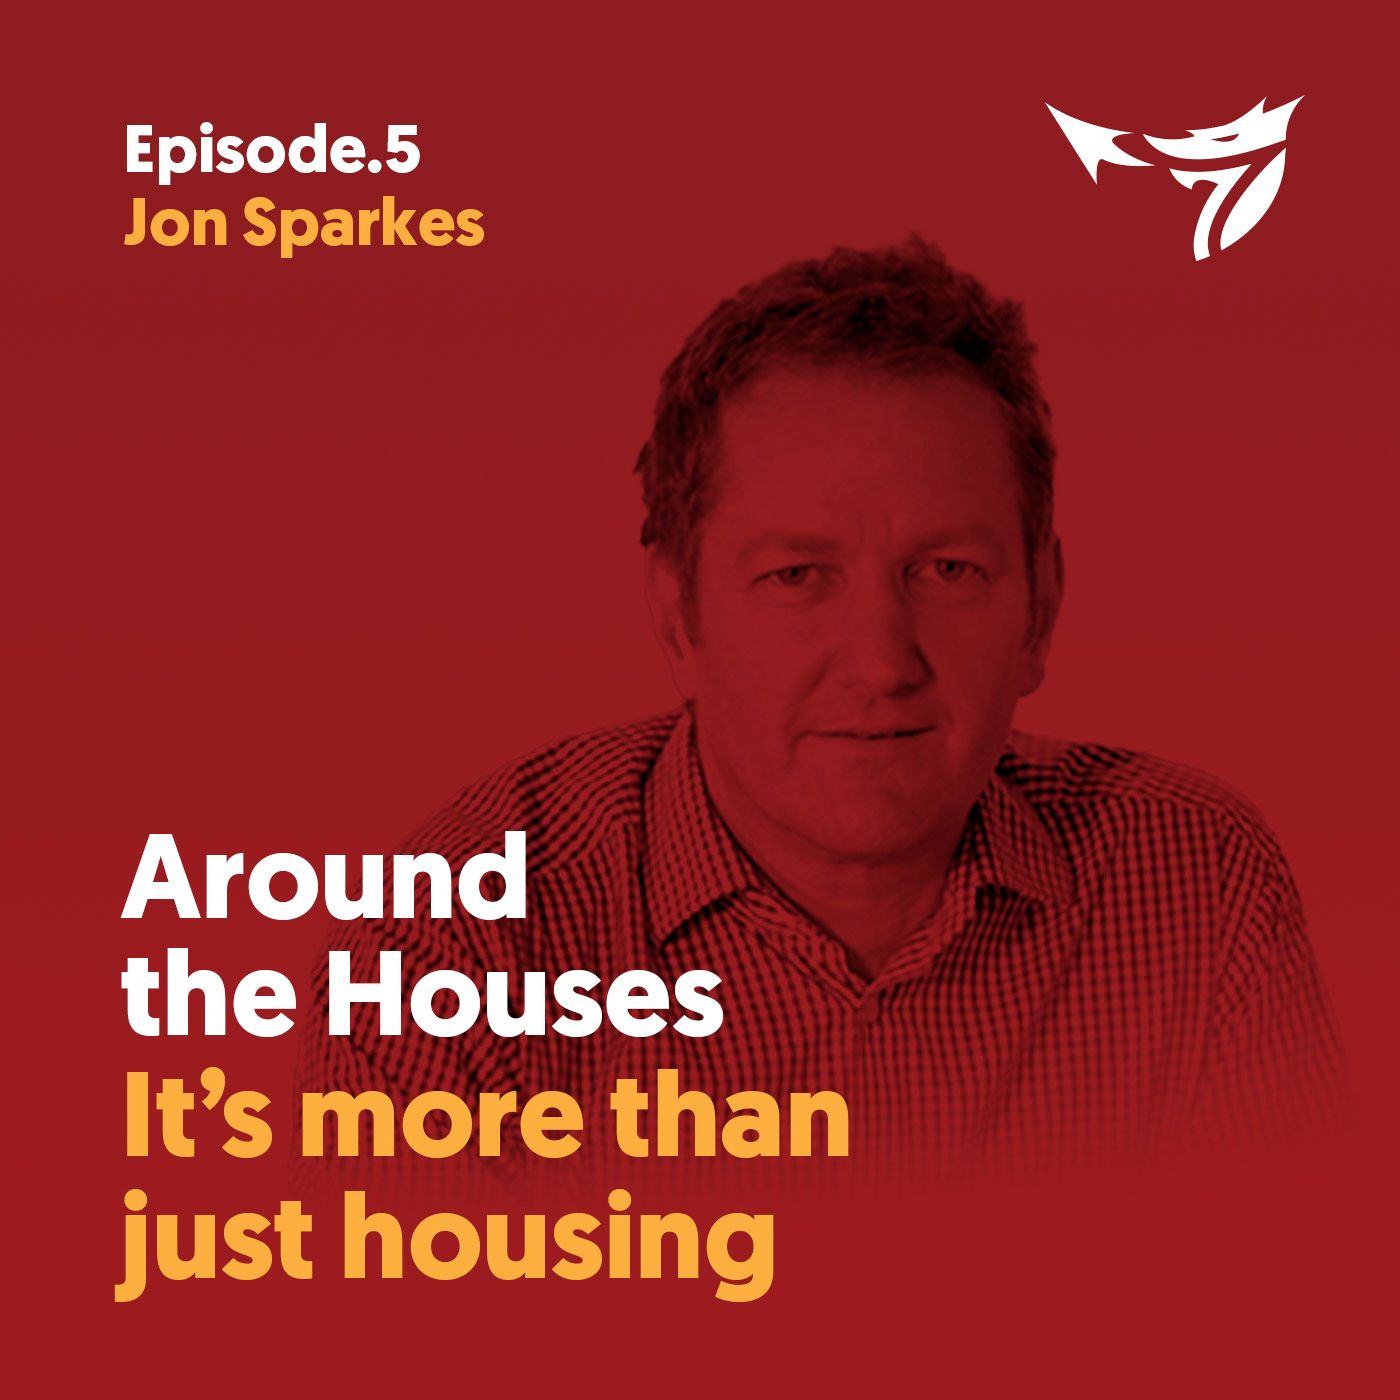 Jon Sparkes on homelessness